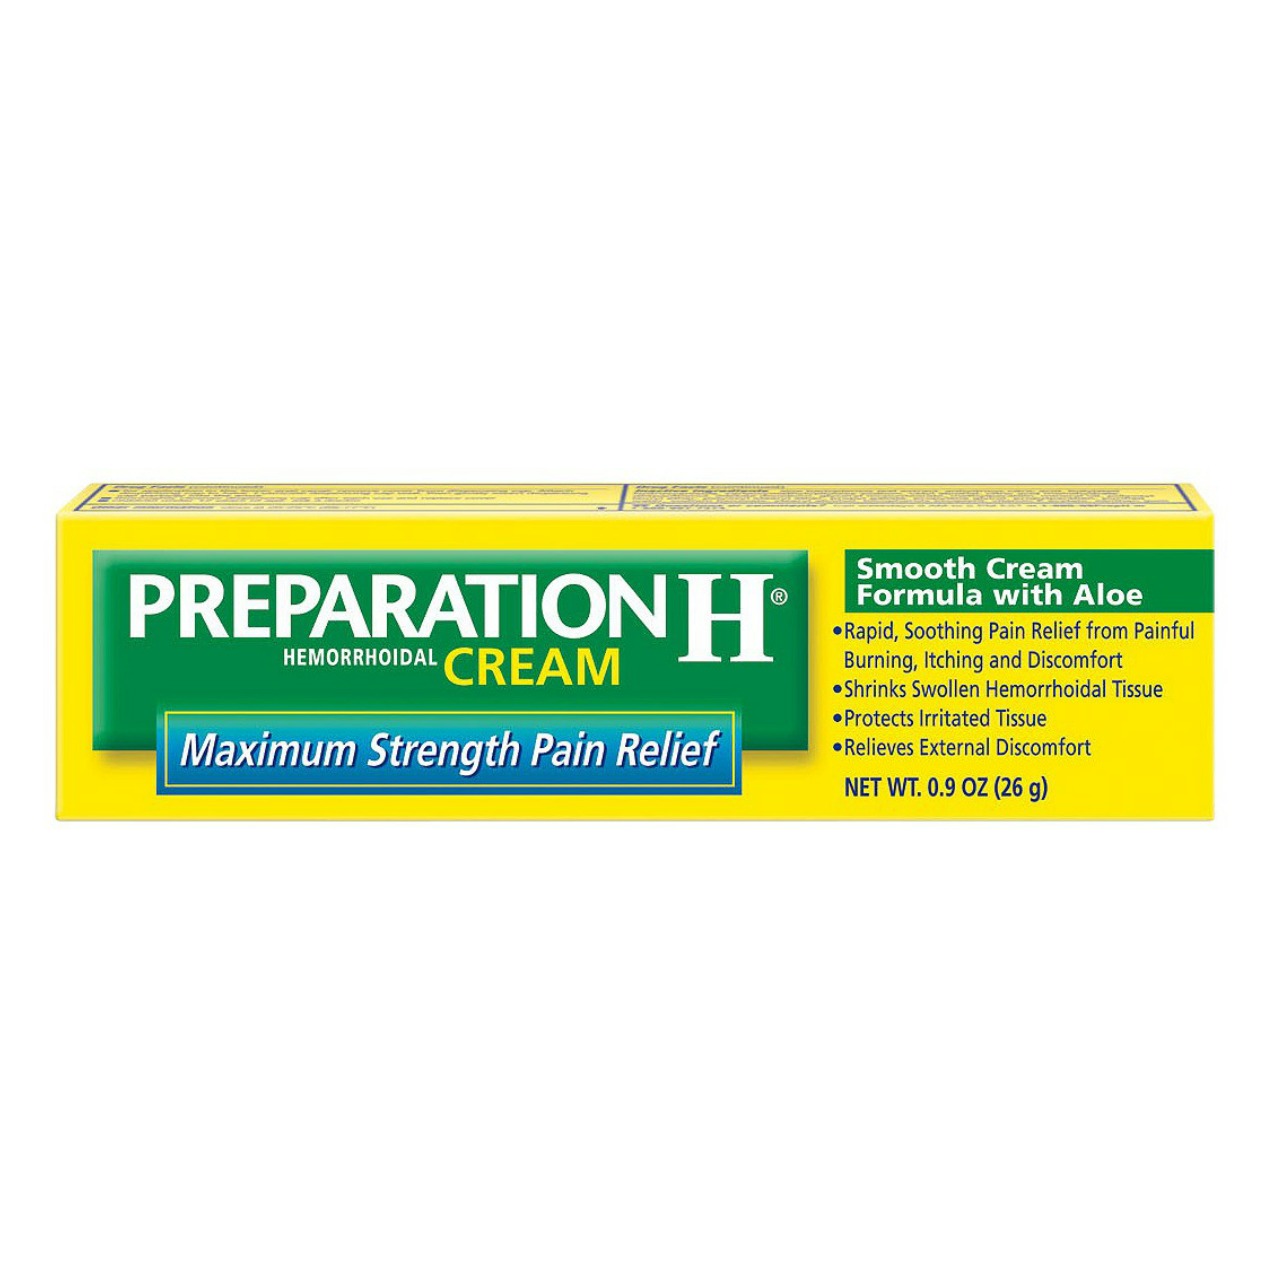 PREPARATION H Hemorrhoidal Cream, Maximum Strength Pain Relief, Net. Wt